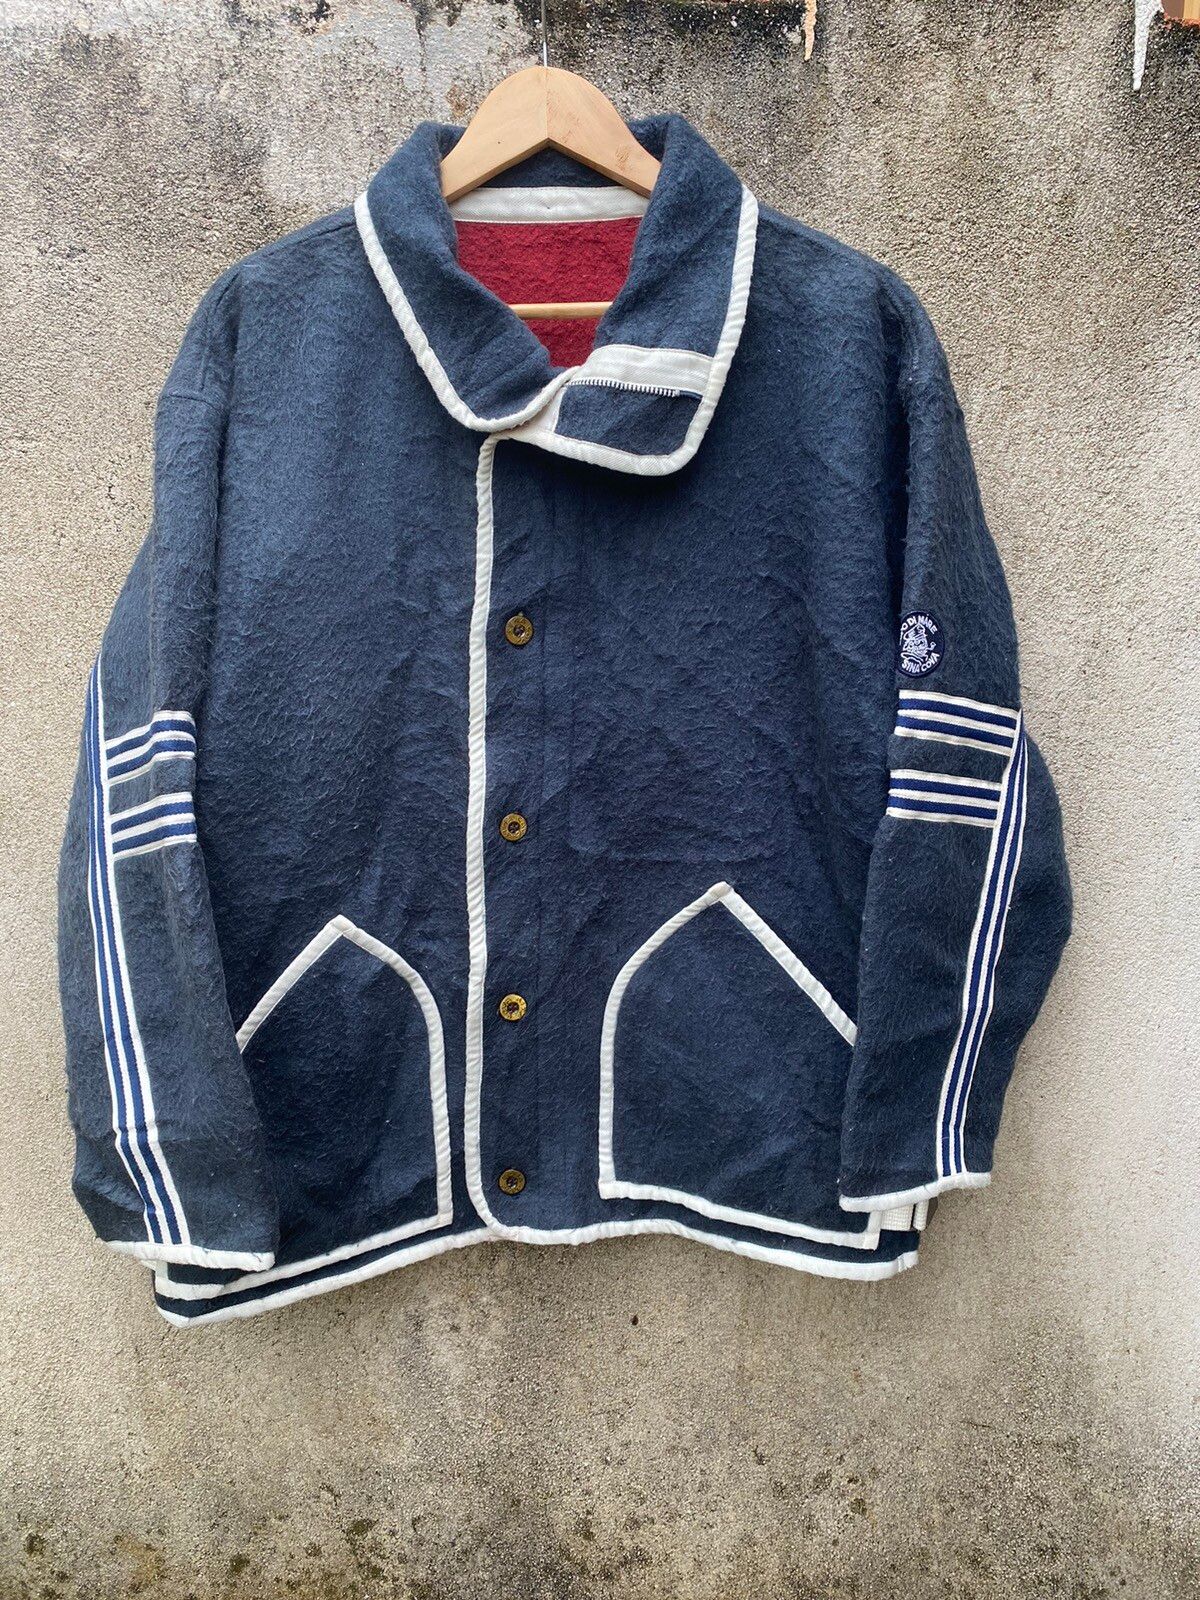 🔥 Rare Vintage Lupo Di Mare Sina Cova Fleece Jacket - 1